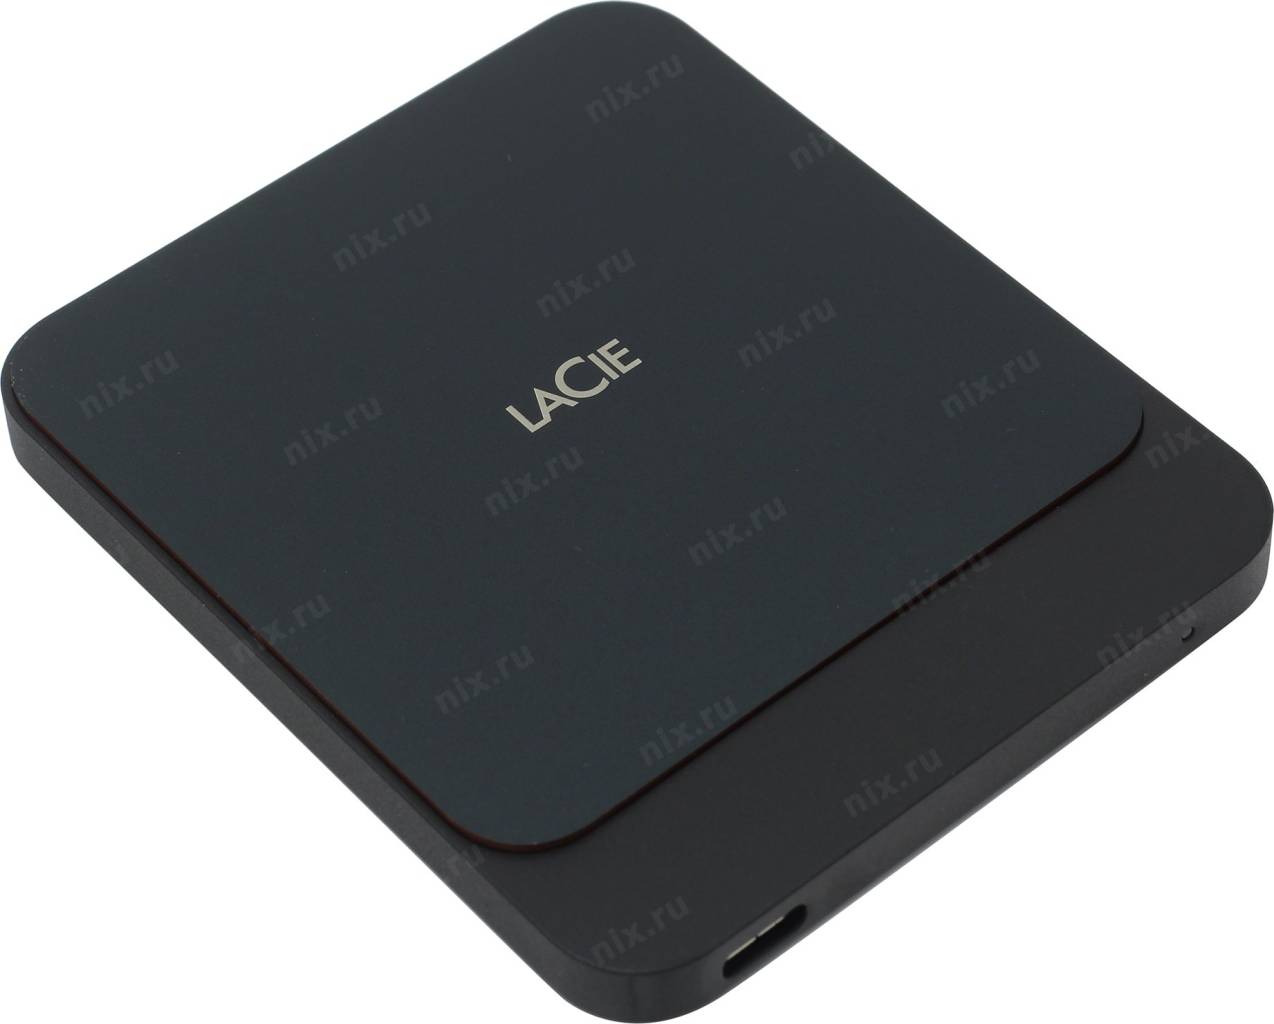   USB3.0 SSD 500 Gb LaCie [STHK500800]